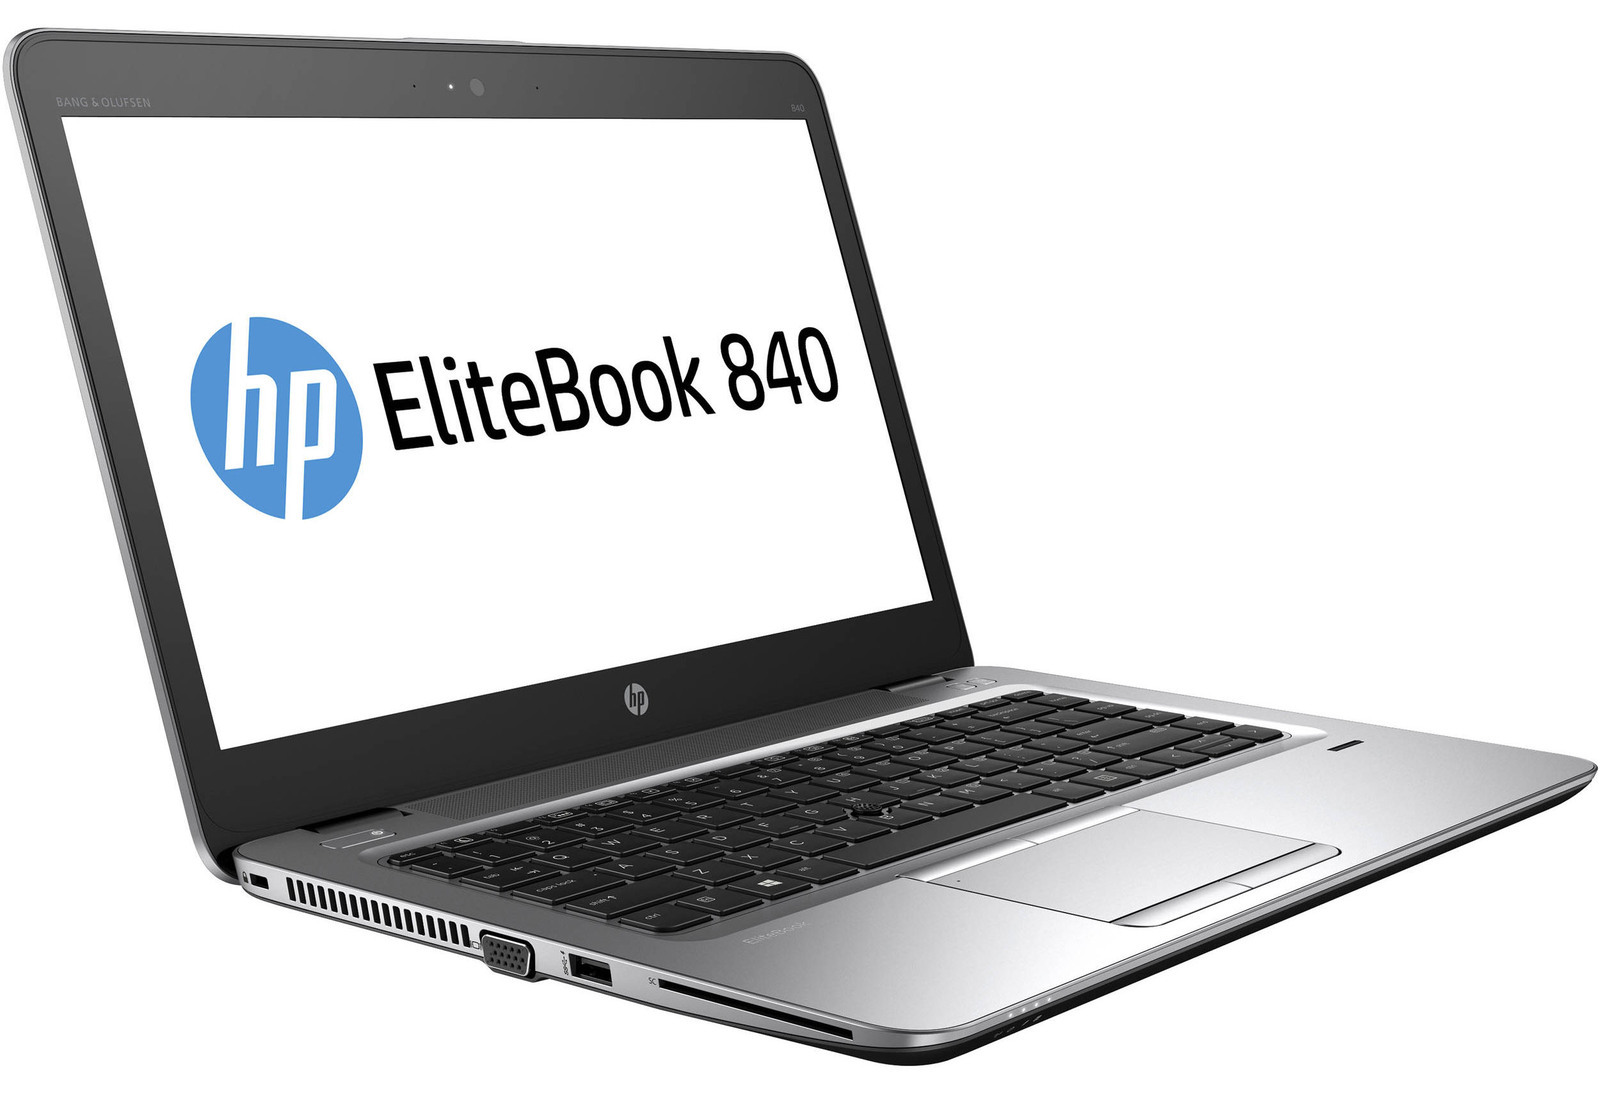 HP Elitebook 840 G4 Intel i5 7300u 2.60Ghz 16GB RAM 256GB SSD 14" Webcam Win 10 - B Grade